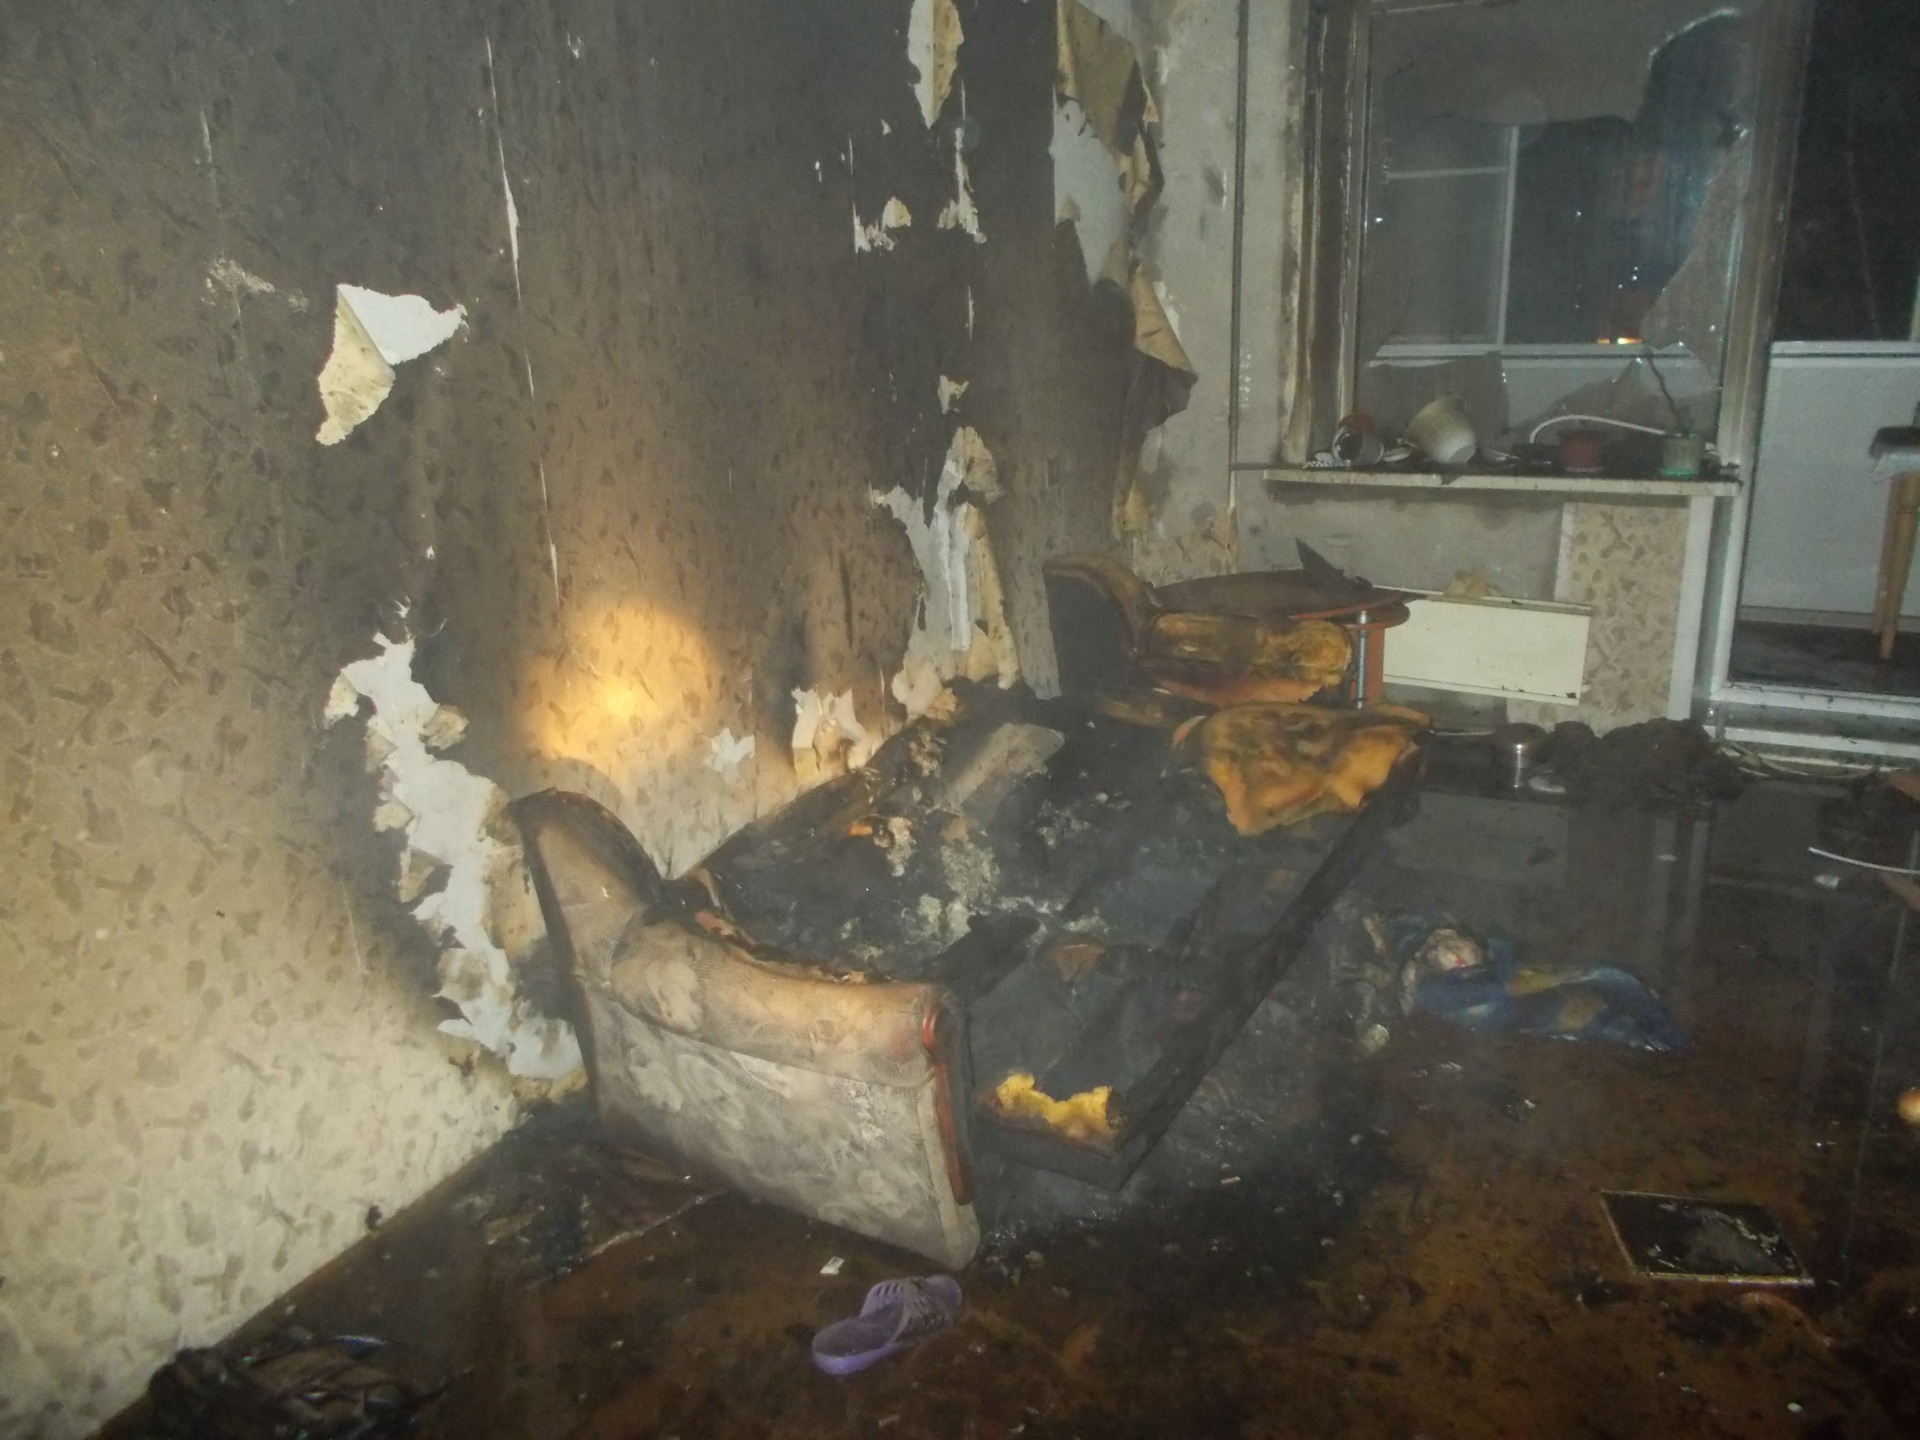 Газ после пожара. Квартира после пожара. Пожар в квартире.